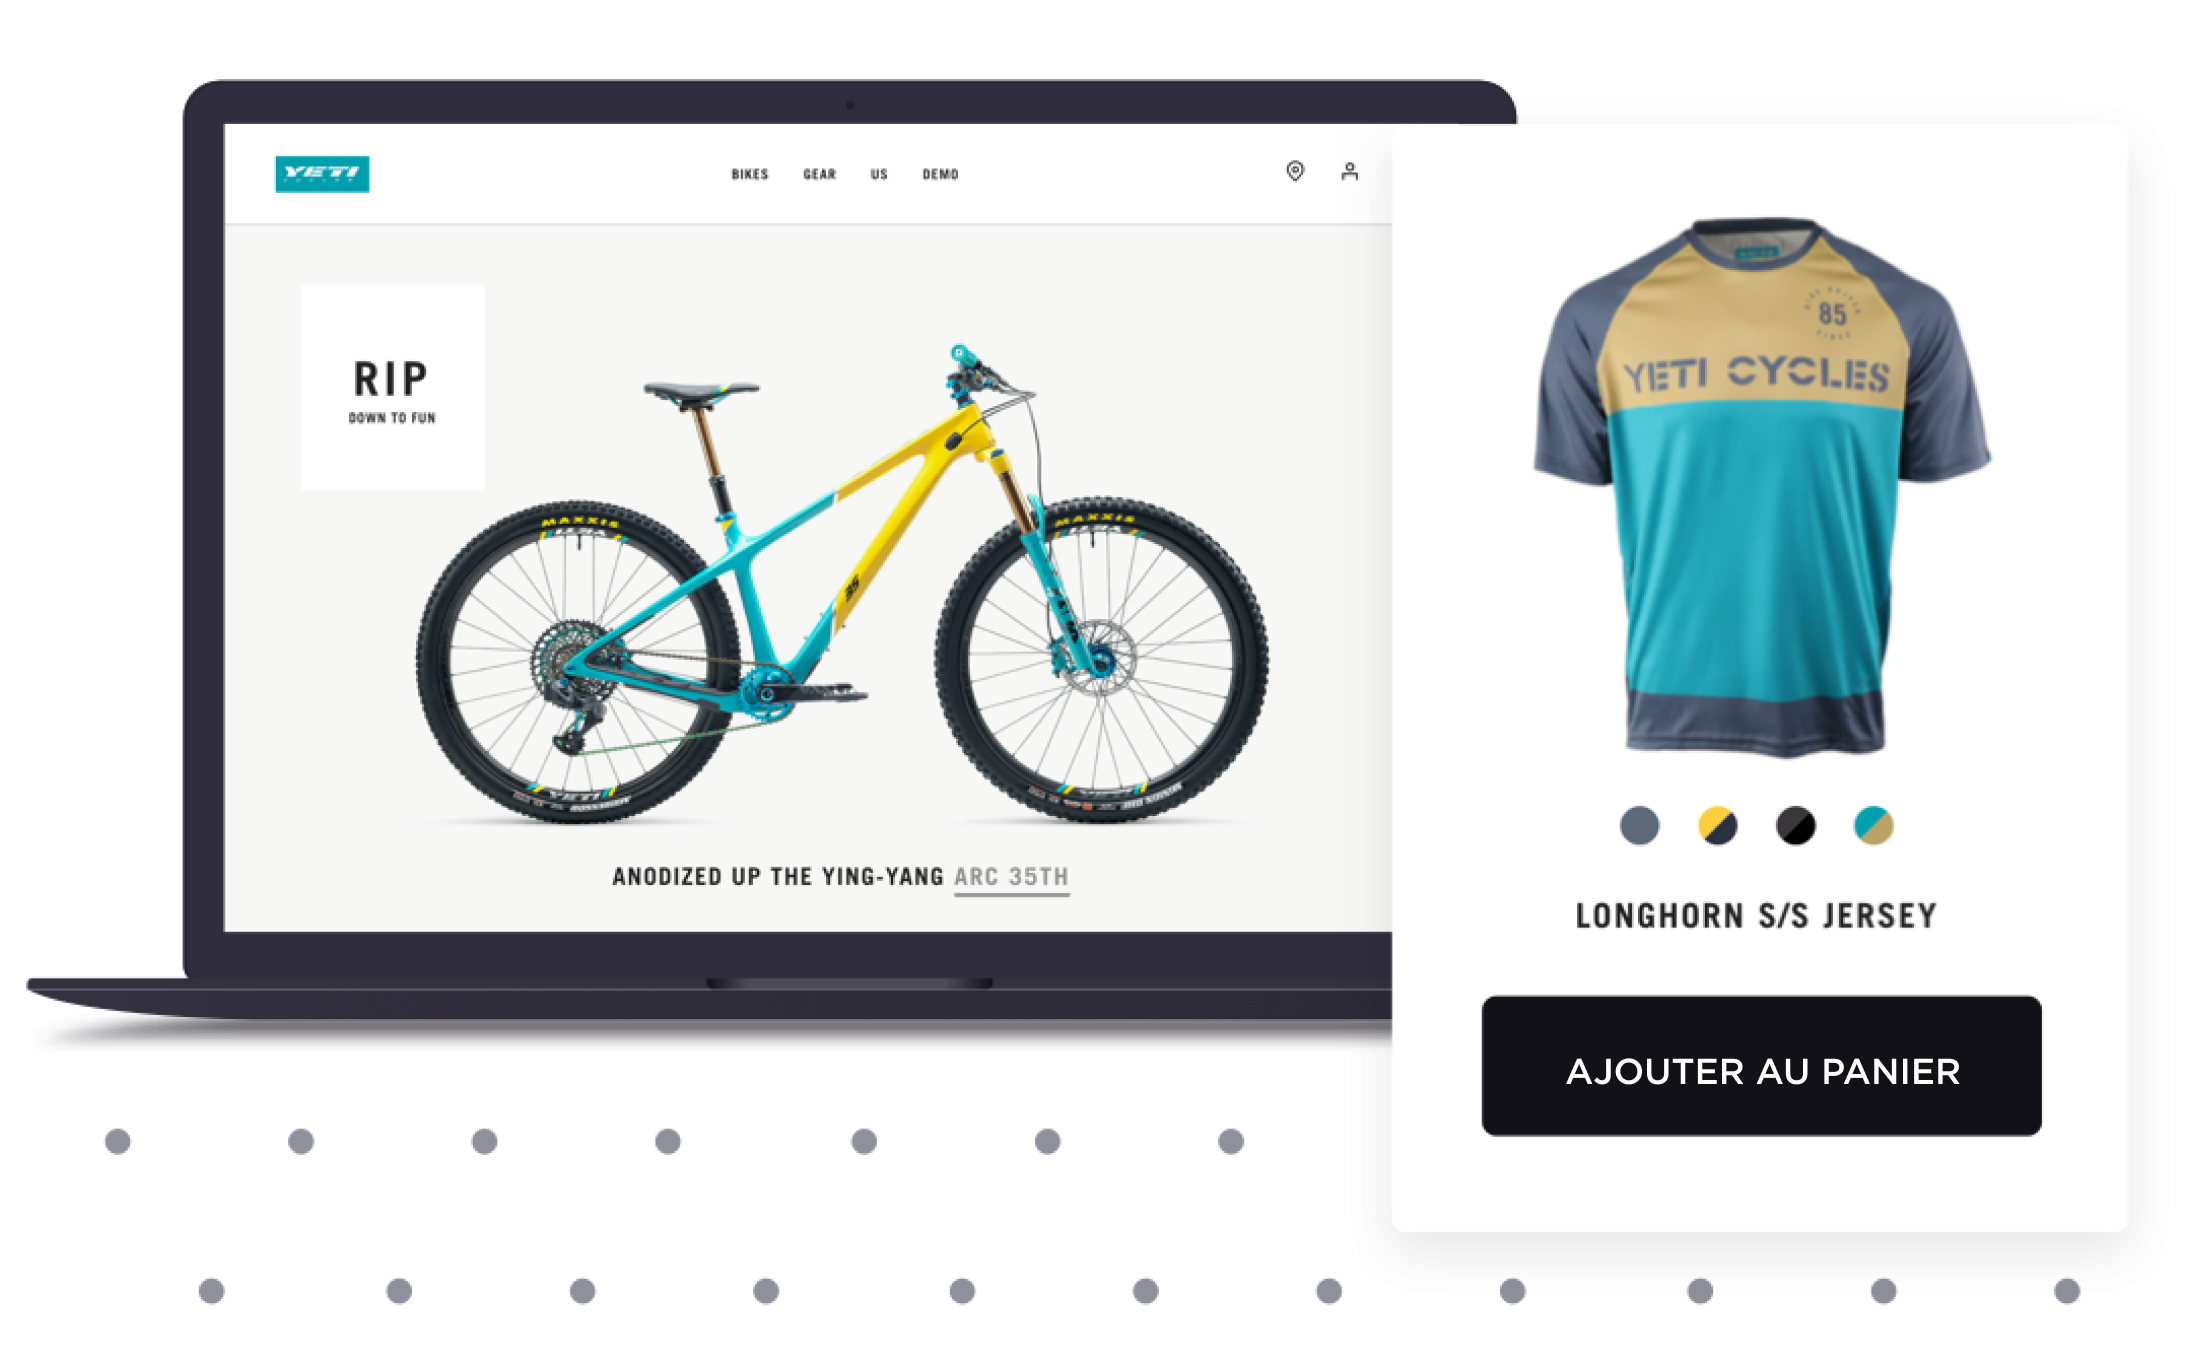 Internacional francia citar imagen escaparate producto bicicleta ciclismo maillot yeti cycles 2x